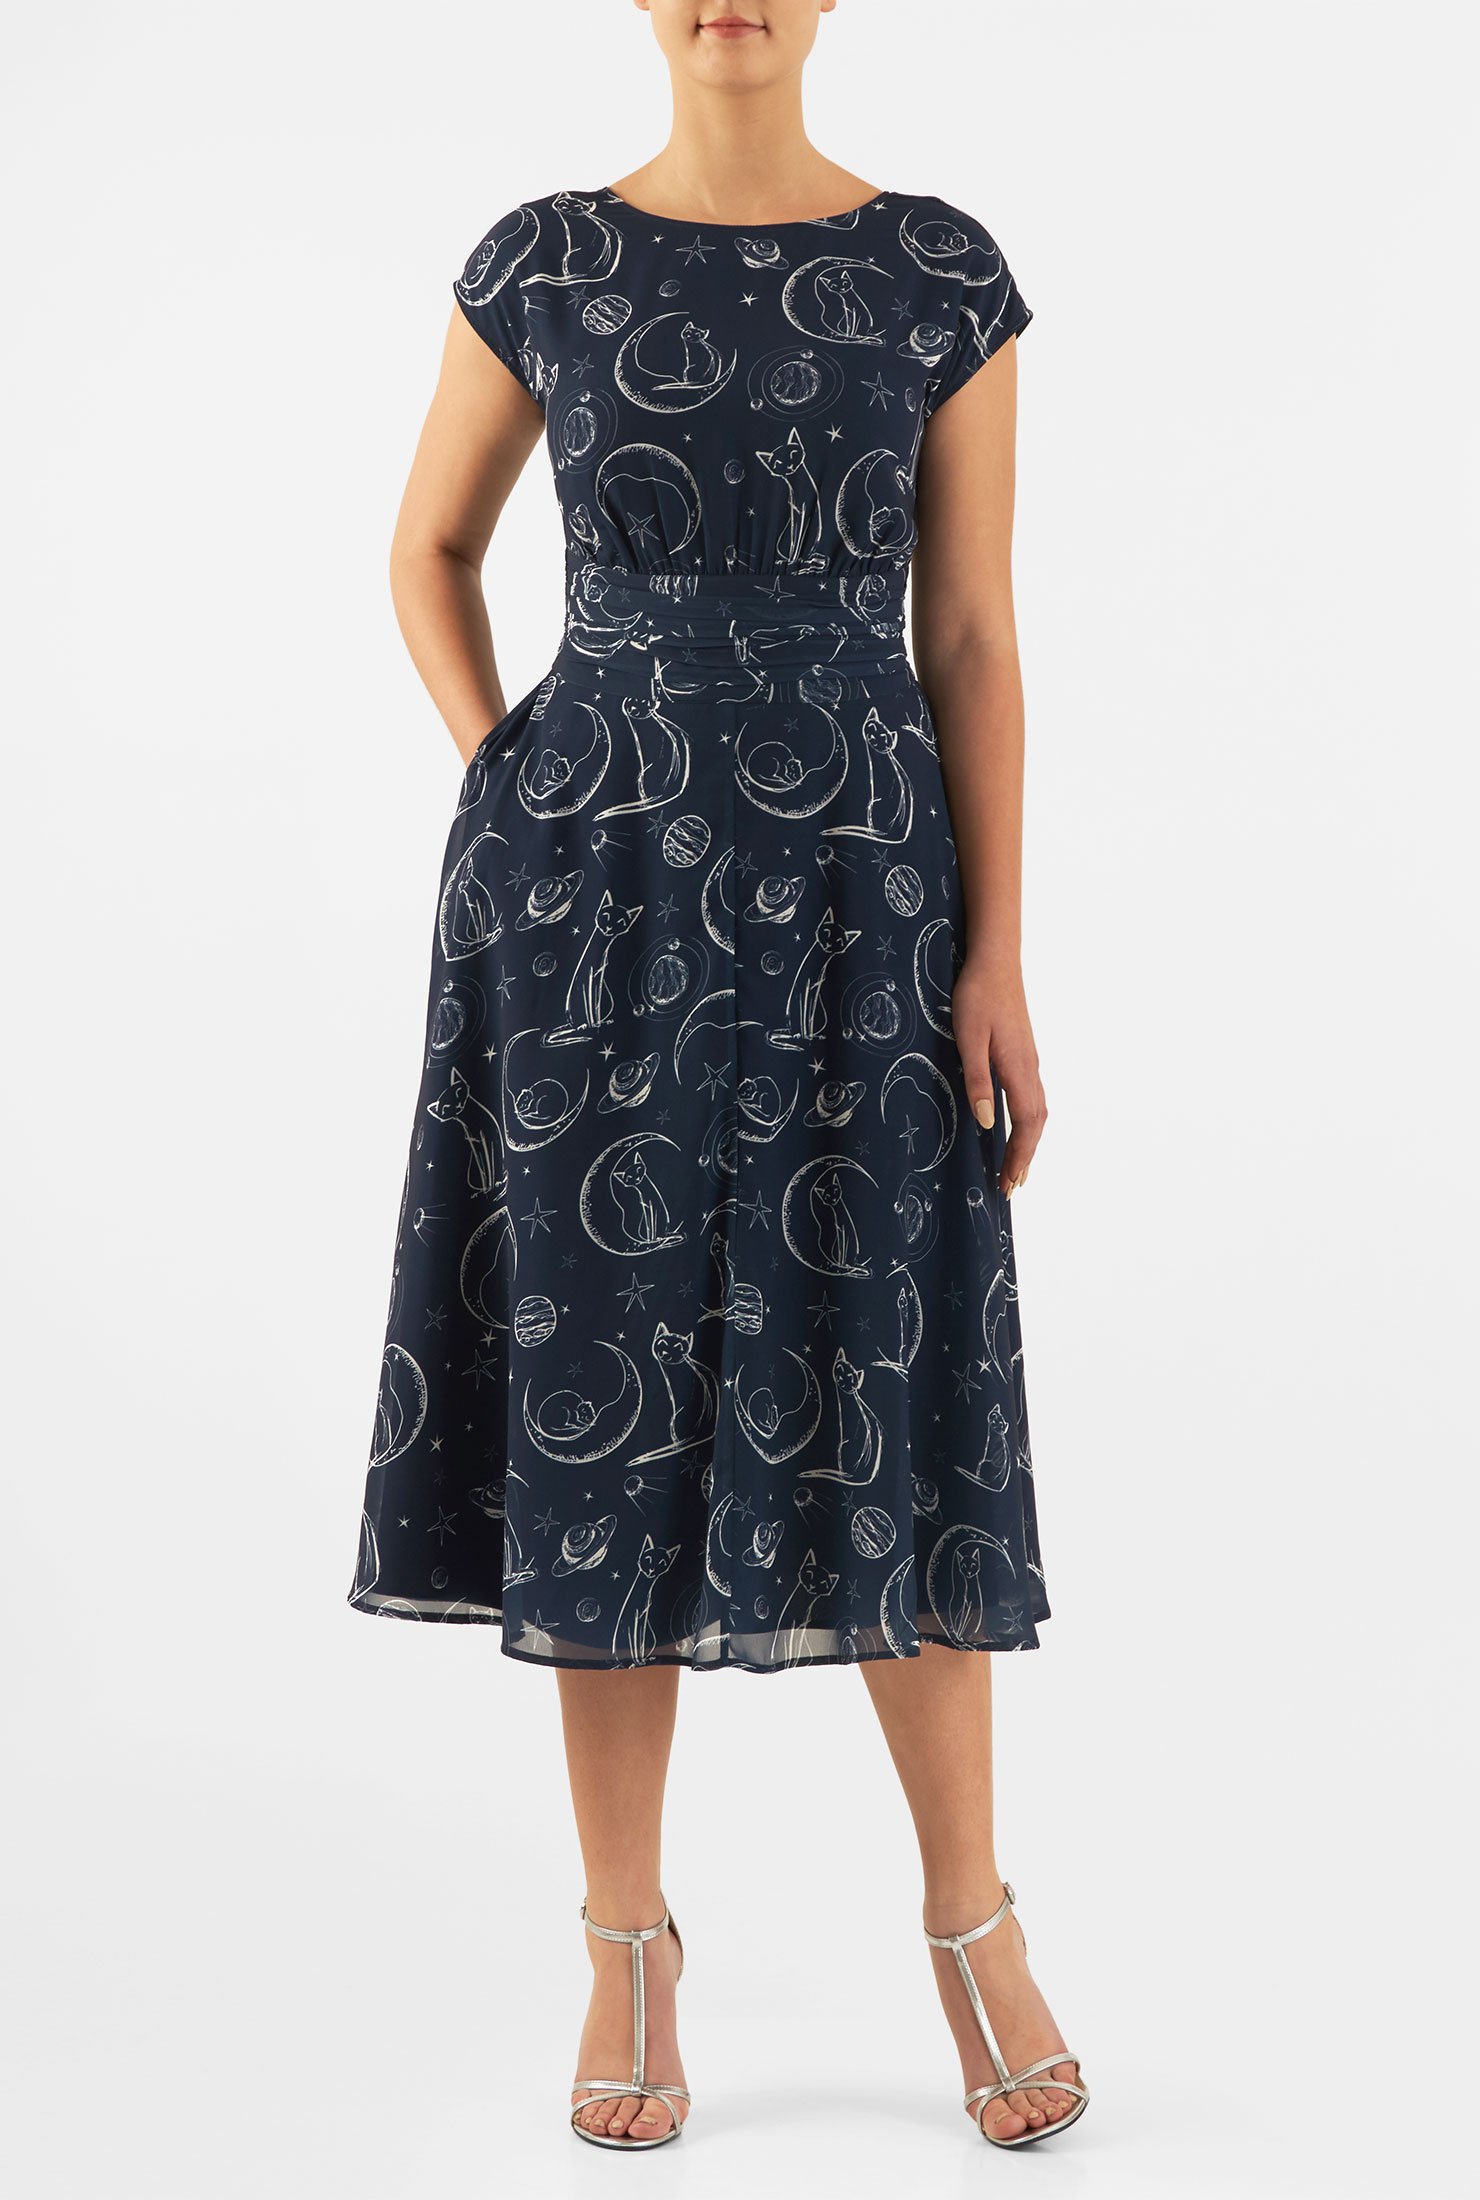 Shop Cat and moon print pleated empire georgette dress | eShakti